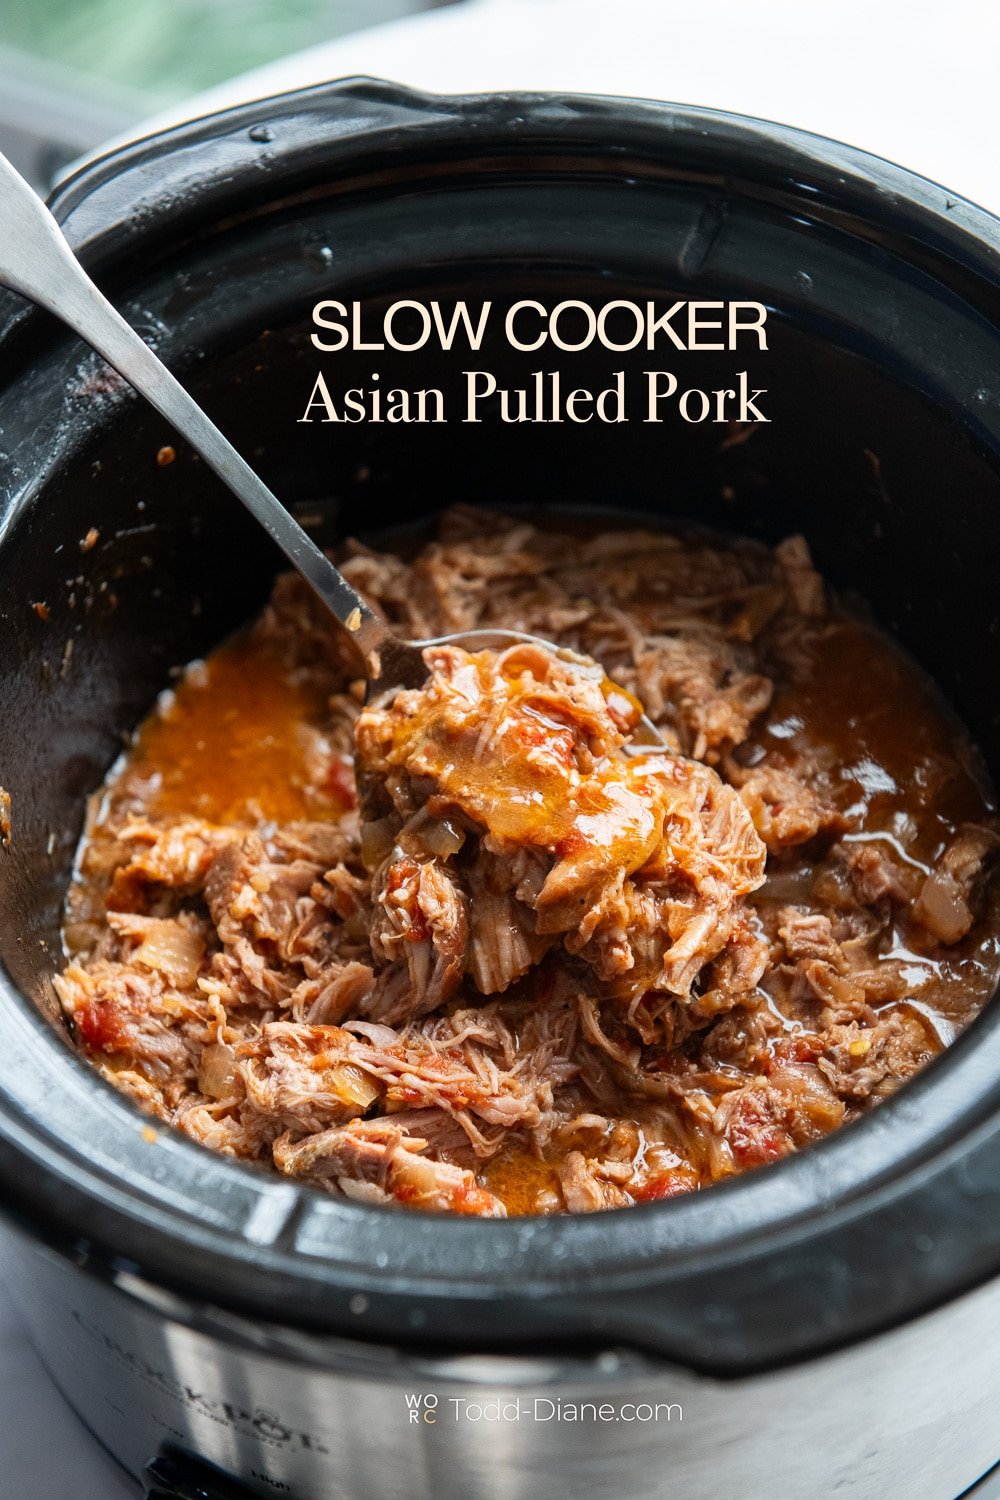 https://whiteonricecouple.com/recipe/images/Slow-Cooker-Asian-Pulled-Pork-WORC-2.jpg